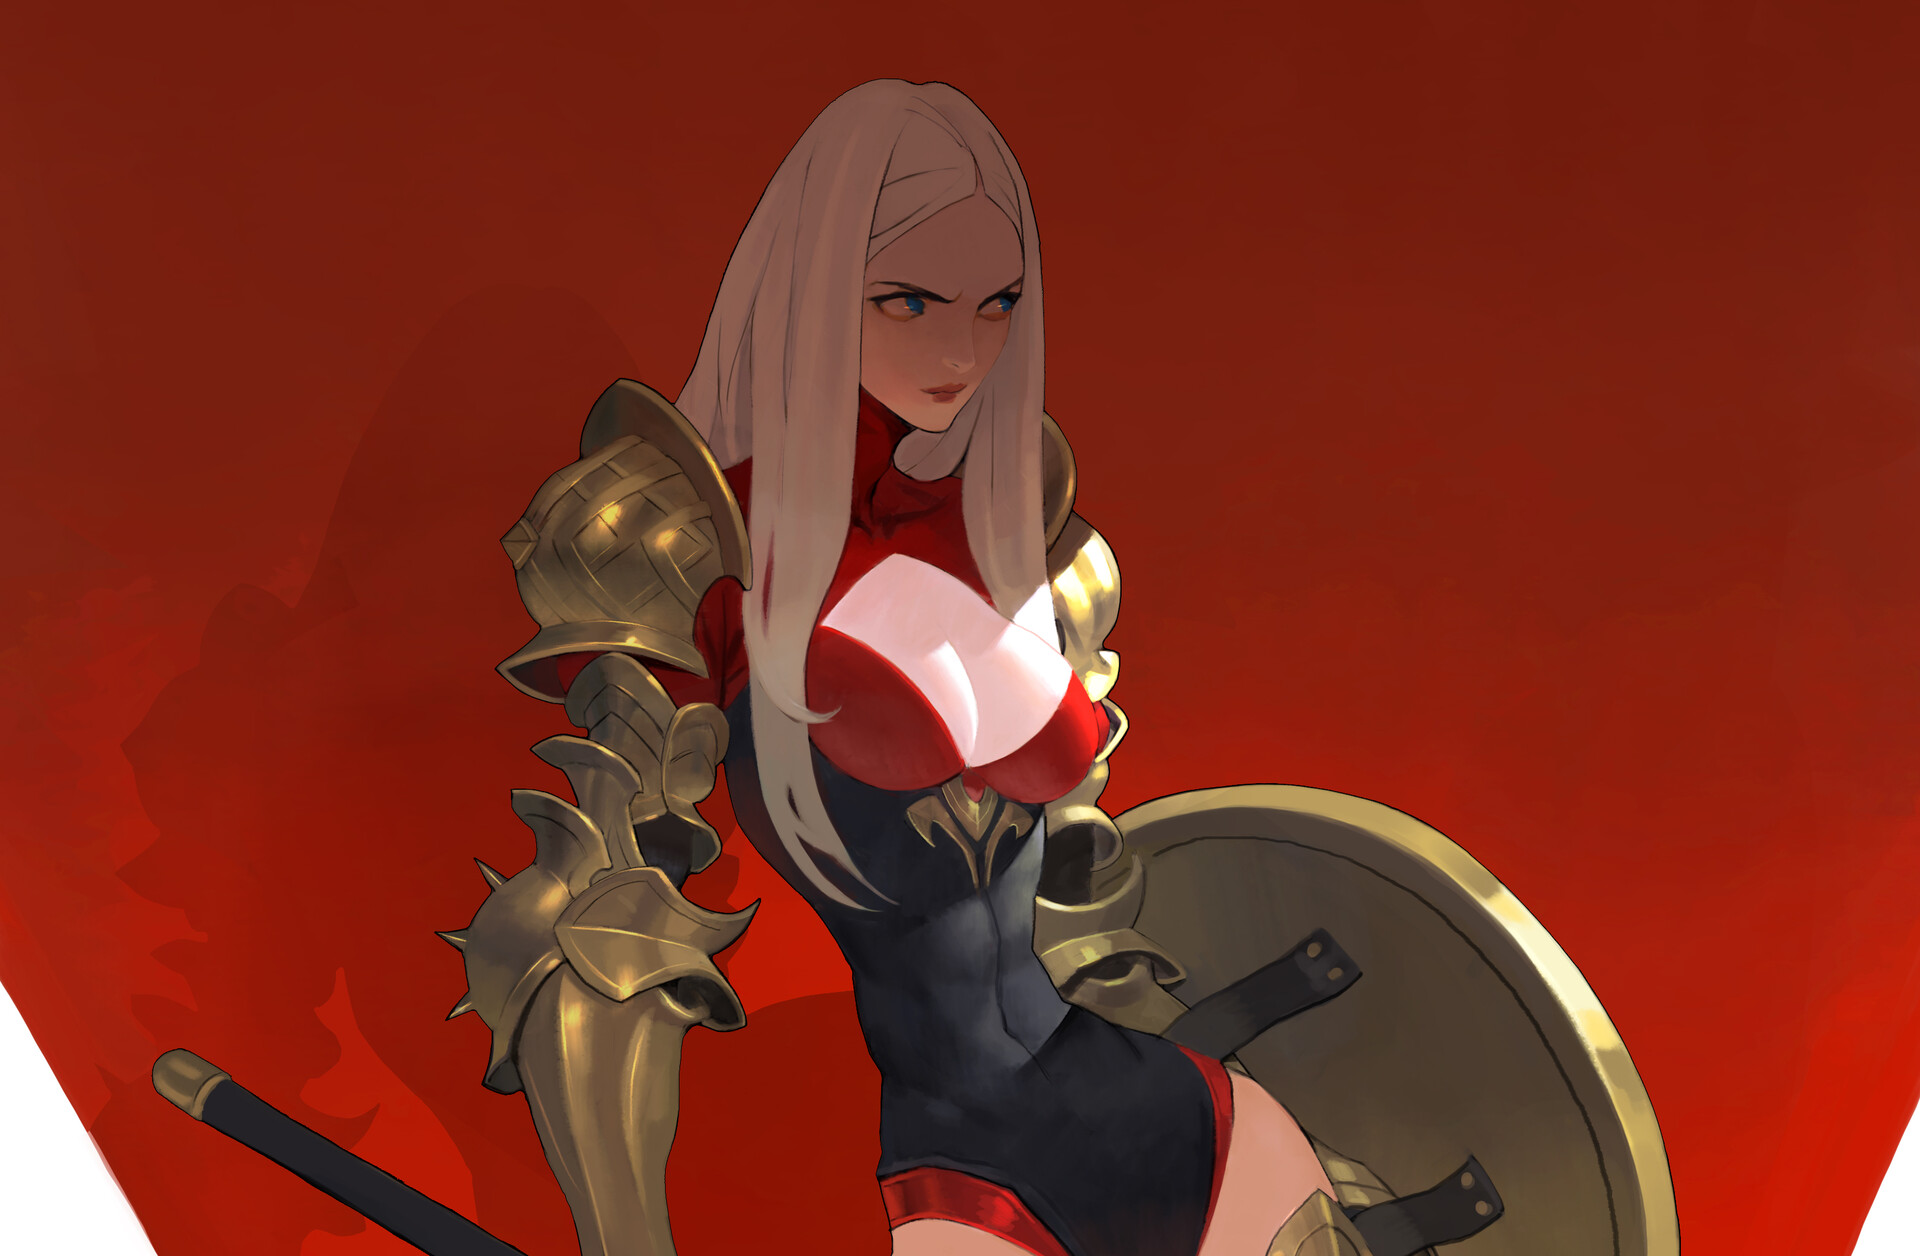 General 1920x1256 fantasy art fantasy girl red background women armor long hair shield blue eyes boobs